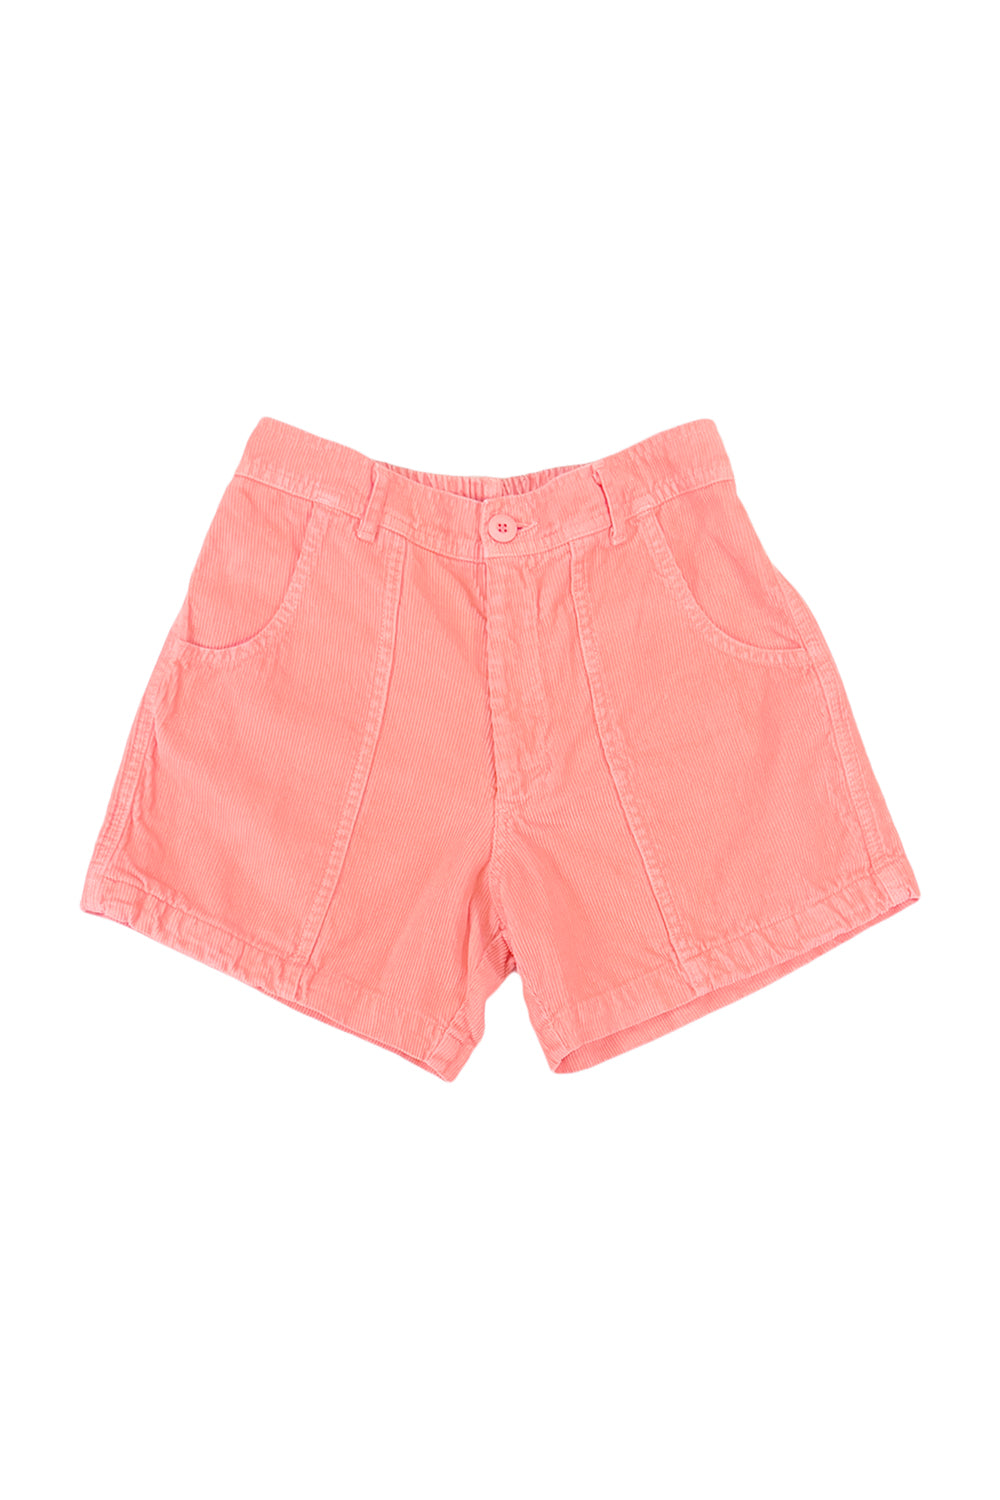 Cabuya Cord Short | Jungmaven Hemp Clothing & Accessories / Color: Pink Salmon